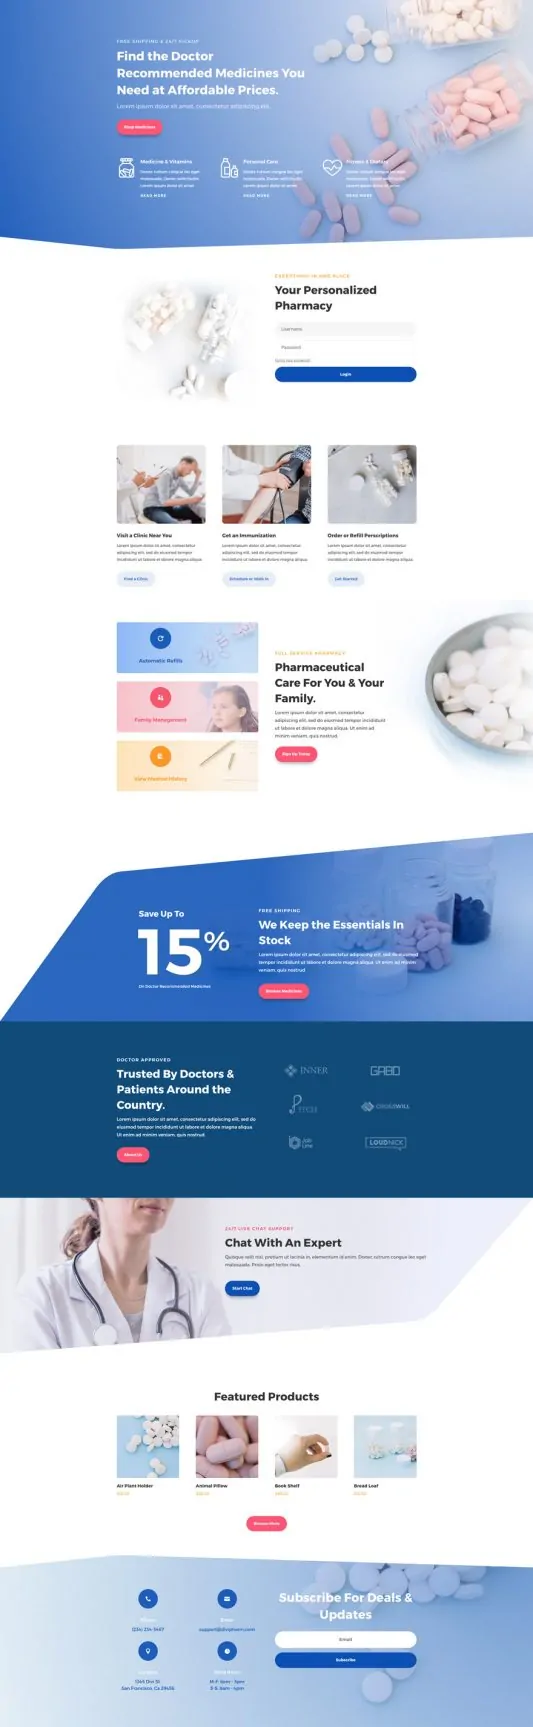 Pharmacy Web Design 4